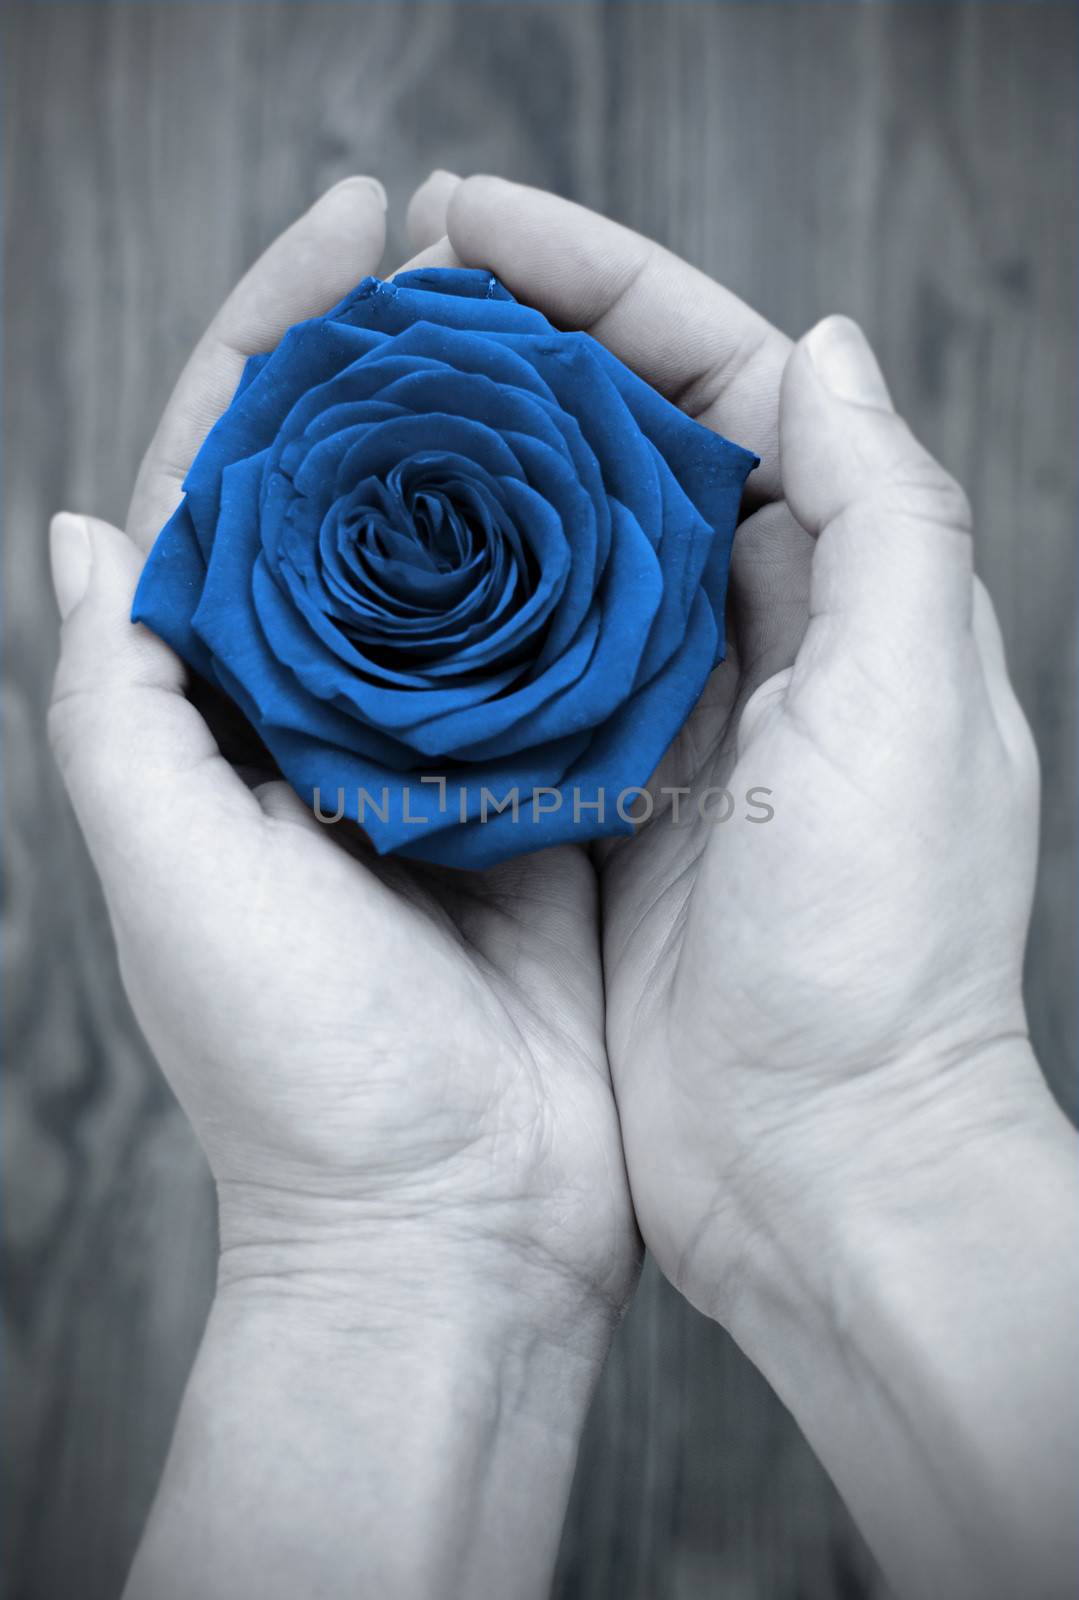 Hands holding a blue rose 